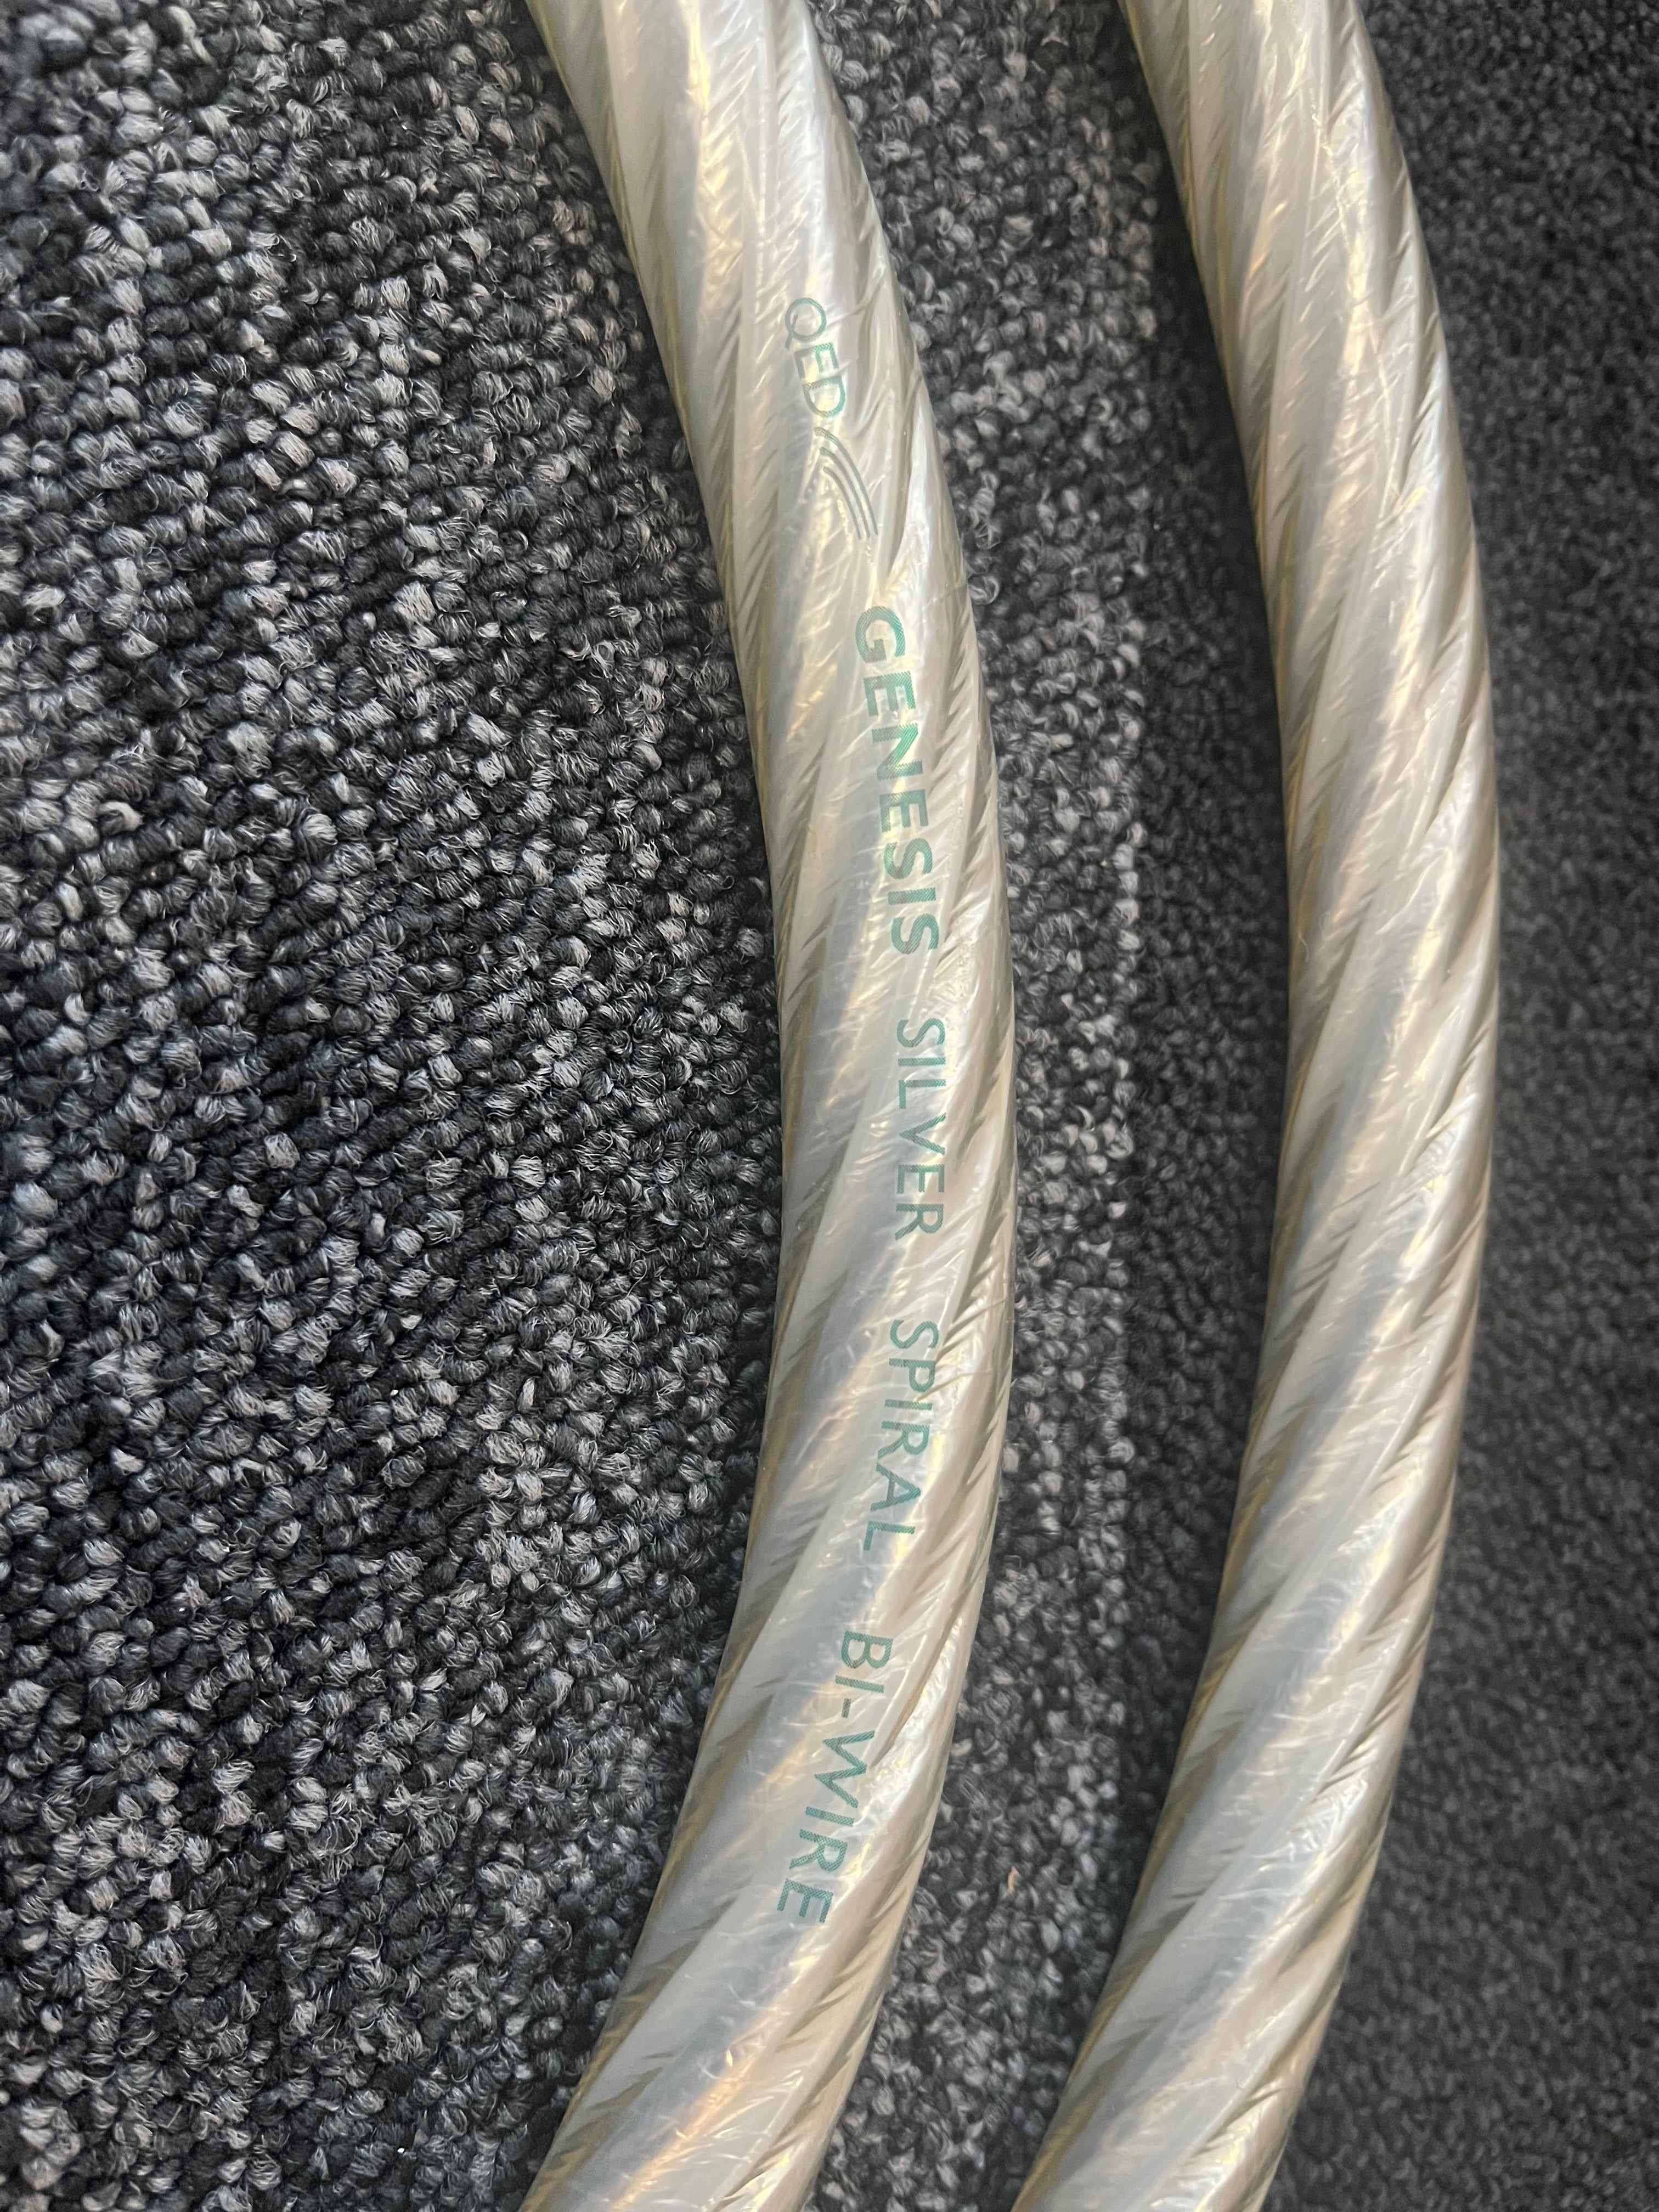 QED Genesis silver spiral Bi-wire kaapelit 3m, vaihtolaite Oulu